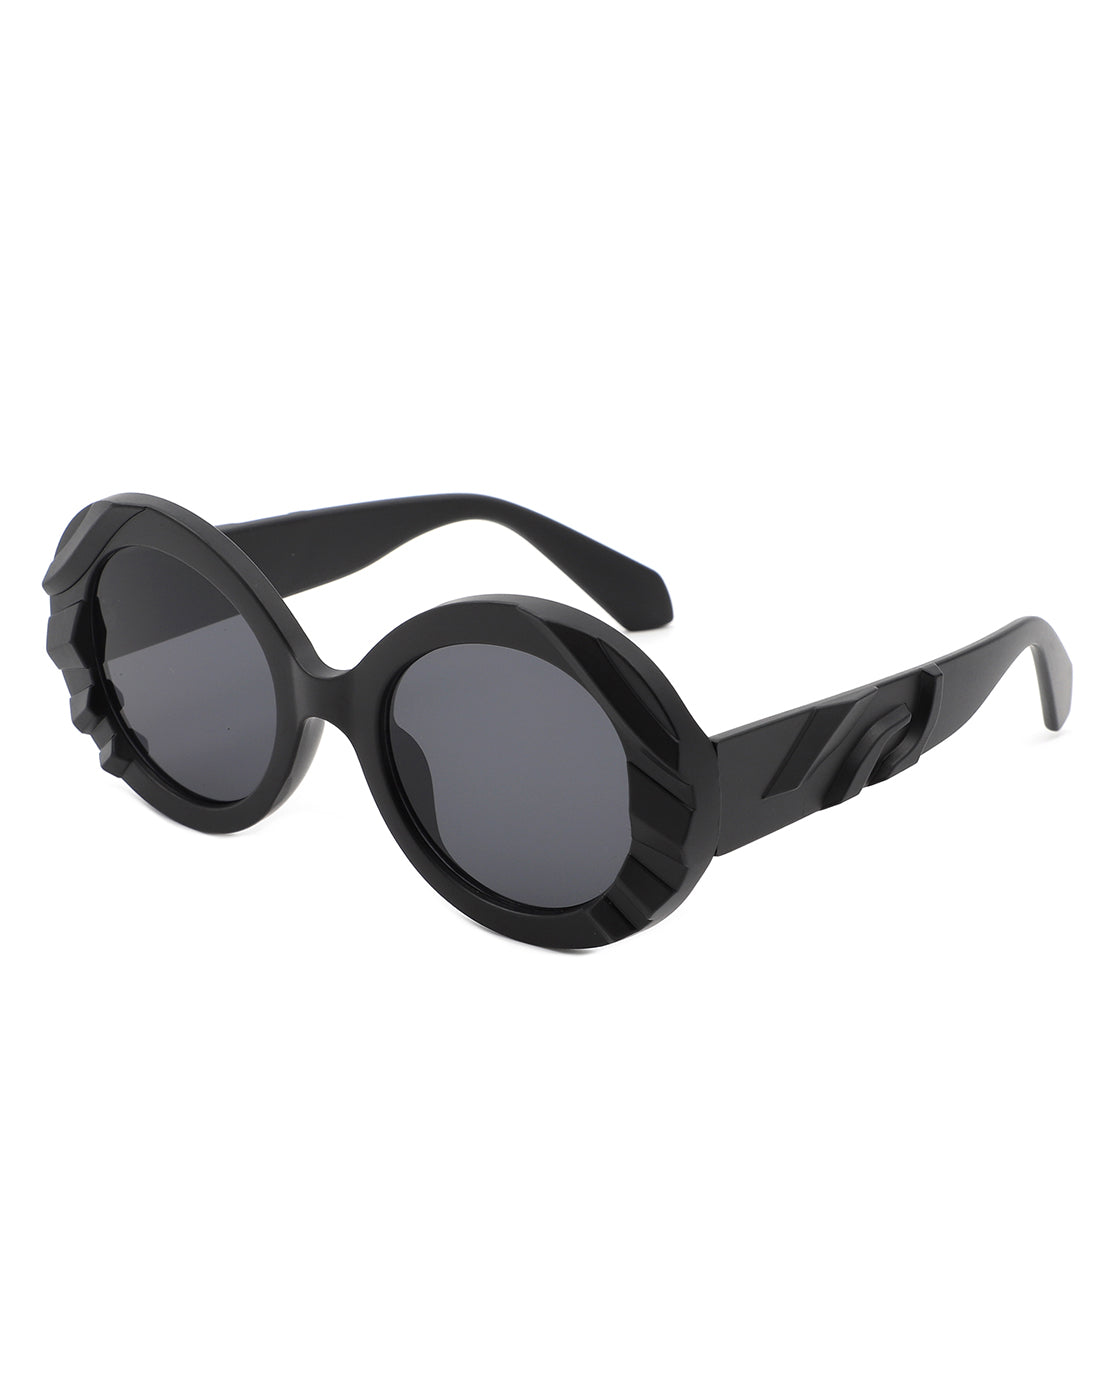 Xasheubia - Cramilo Round Sculpted Oval Frame Women's Fashion Sunglasses